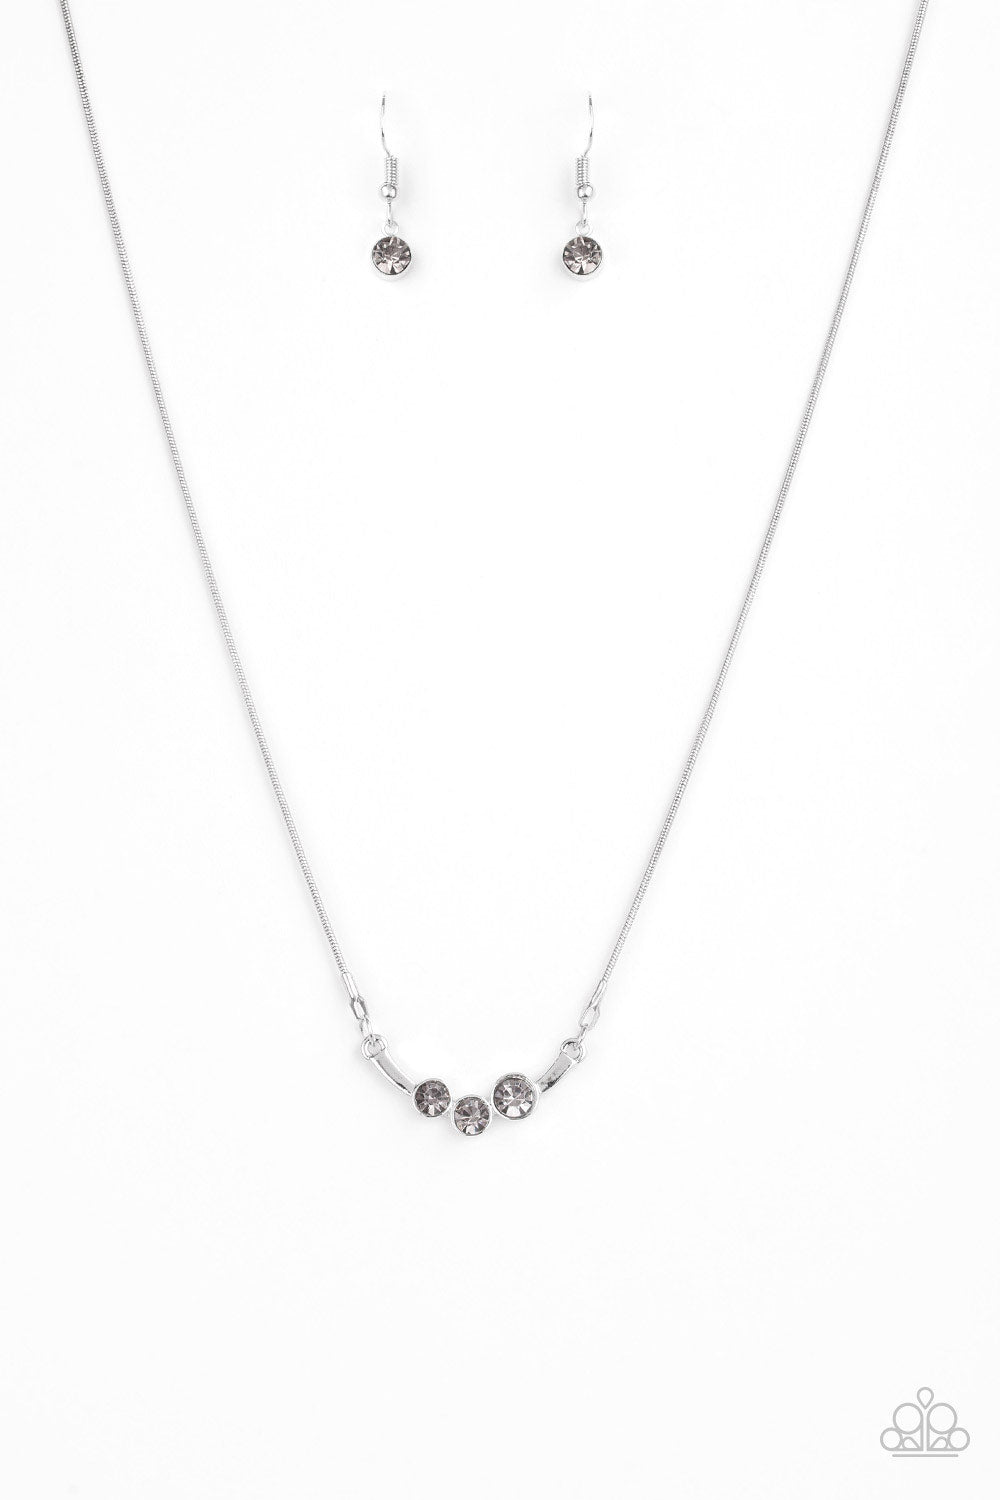 Sparkling Stargazer - Silver Necklace Set - Princess Glam Shop